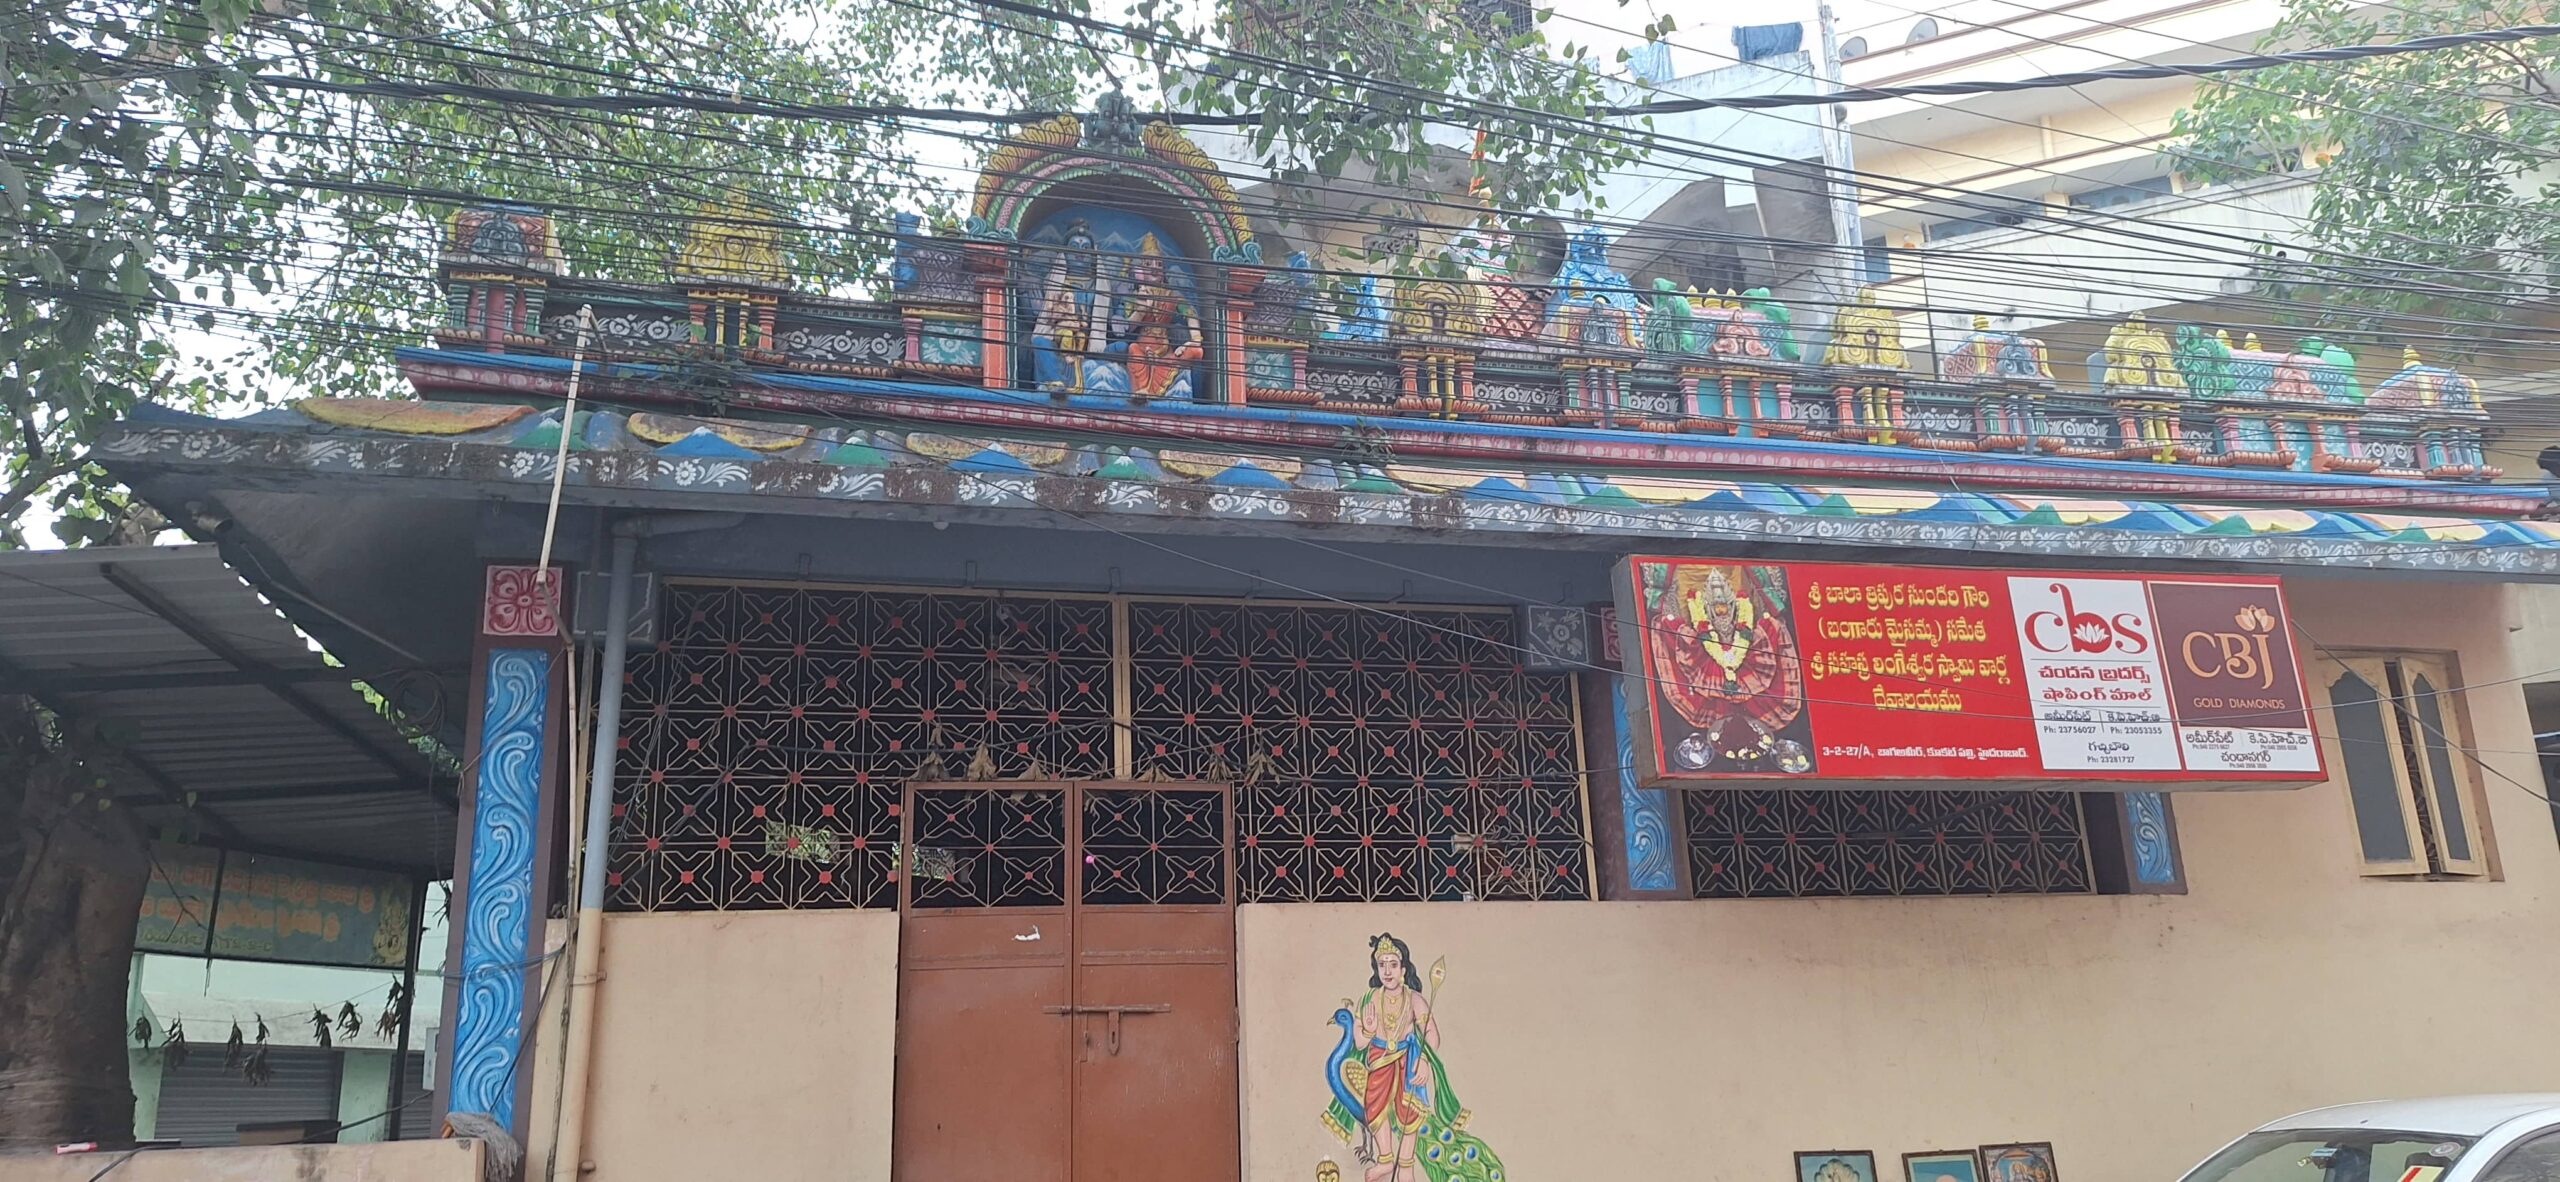 Baghmeeri Temples, Kukatpally, Hyderabad